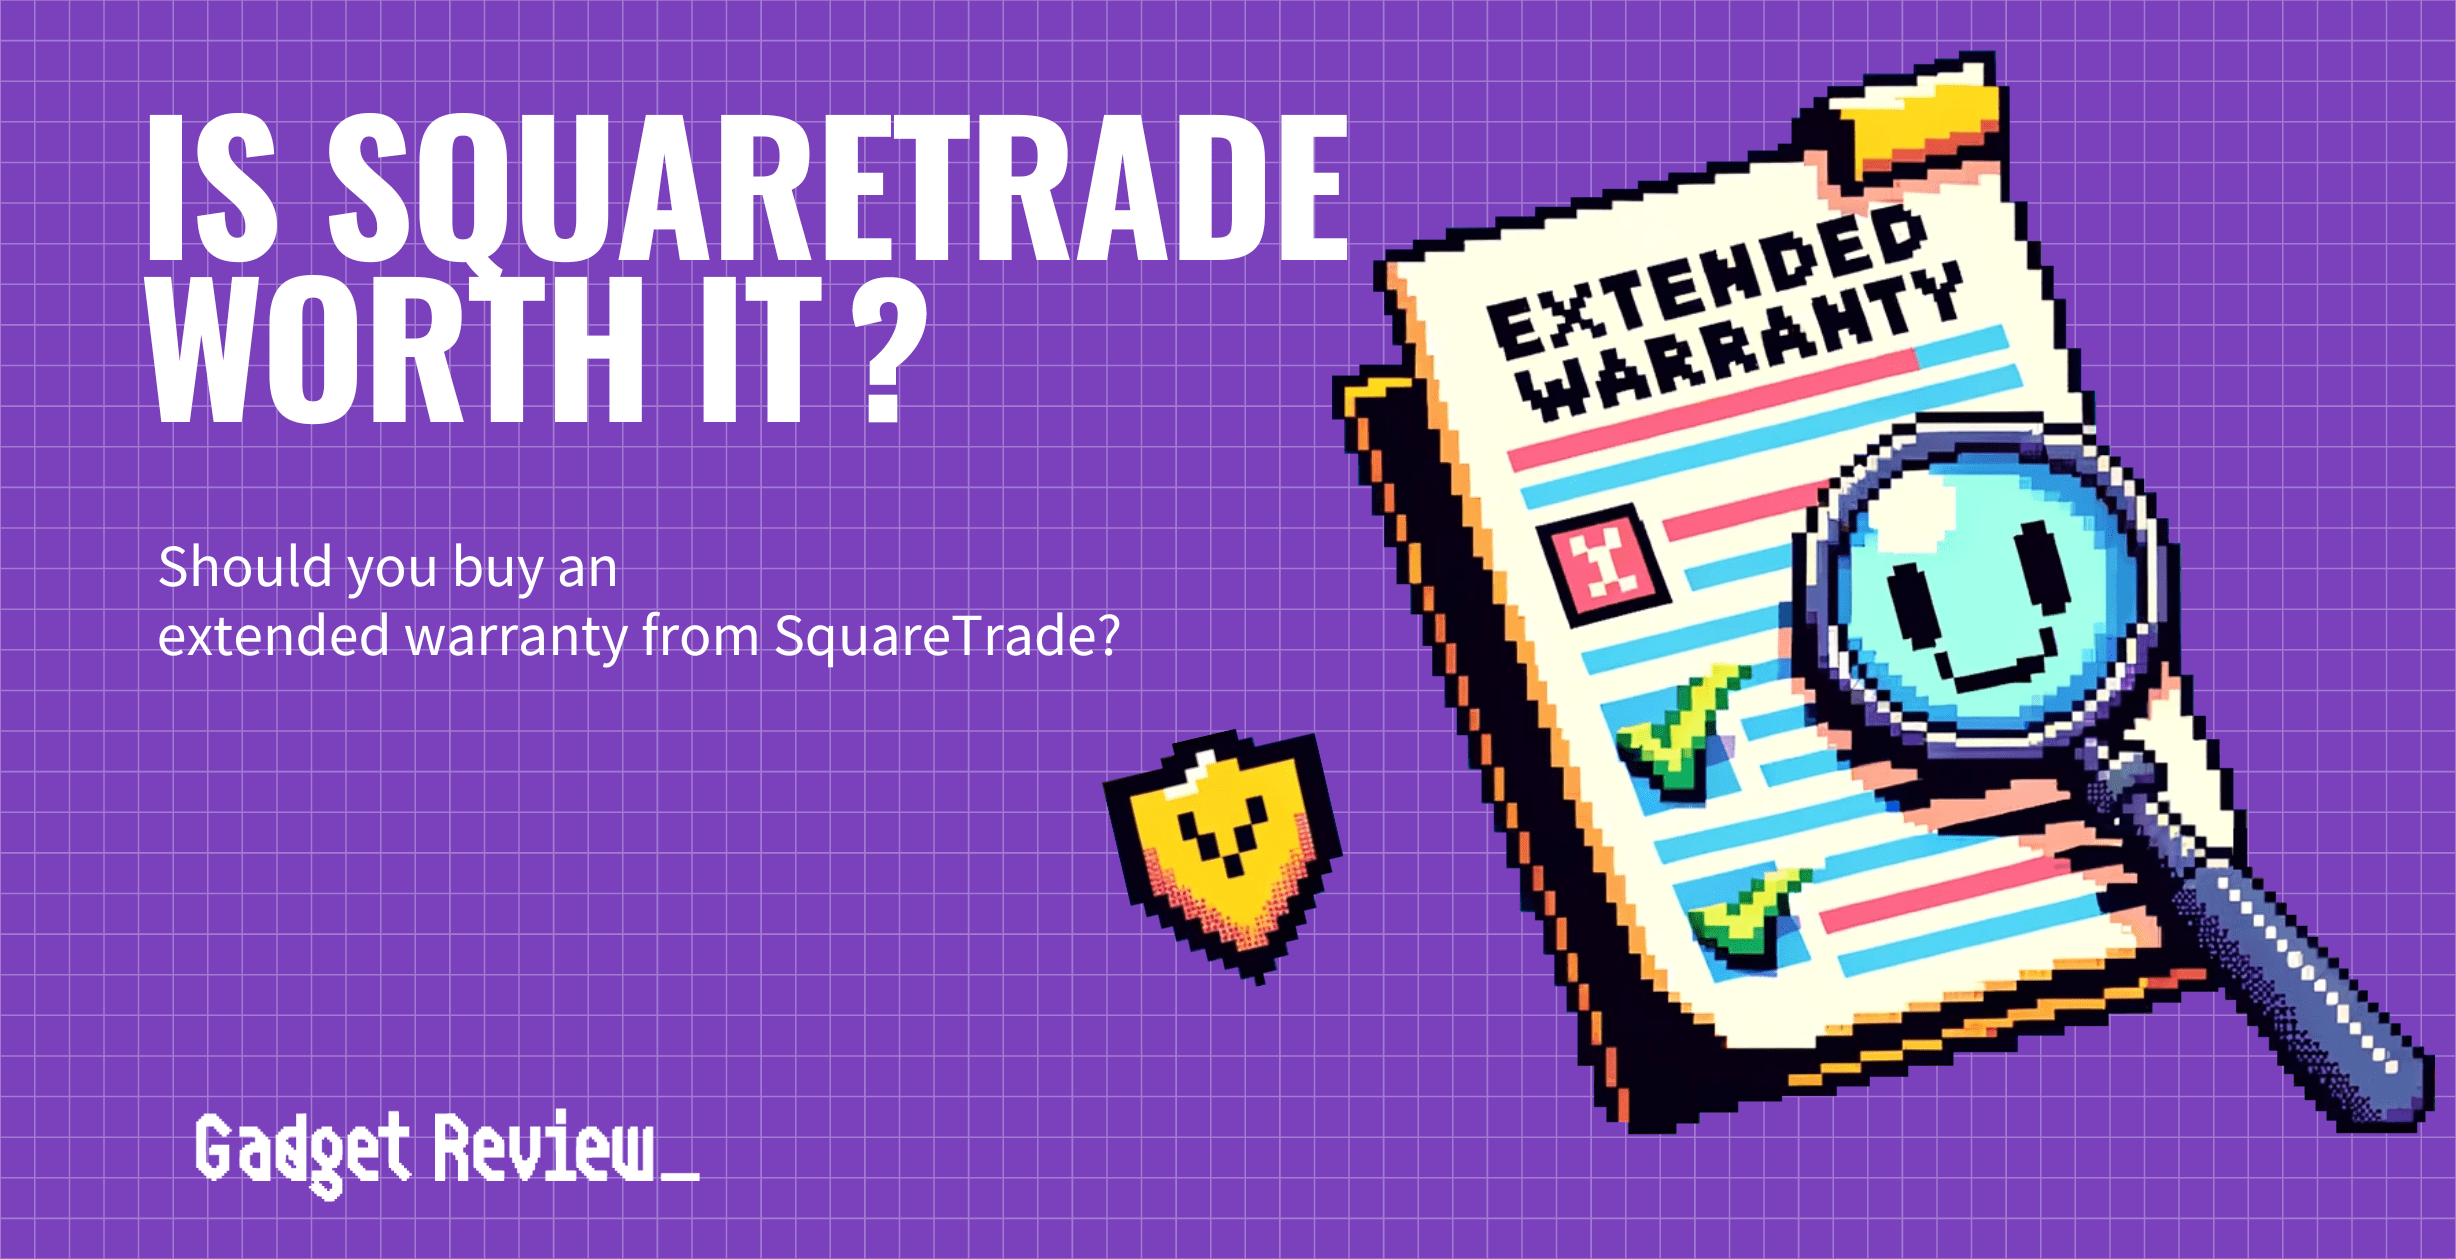 is squaretrade worth it guide